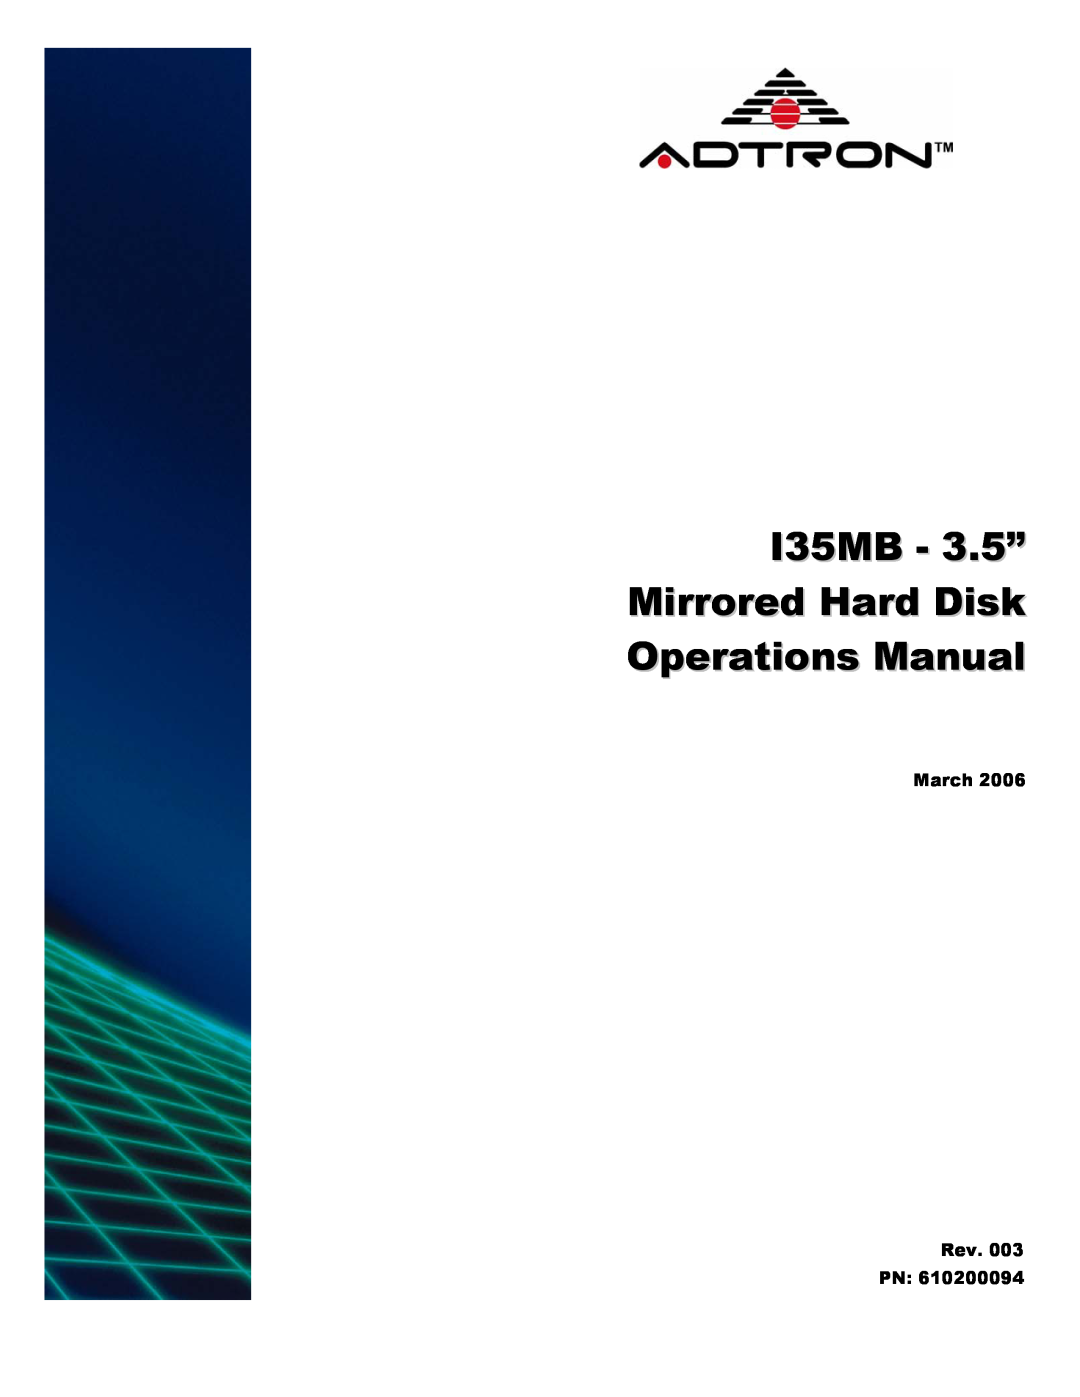 ADTRAN 610200094 manual March Rev. PN, I35MB - 3.5” Mirrored Hard Disk Operations Manual 